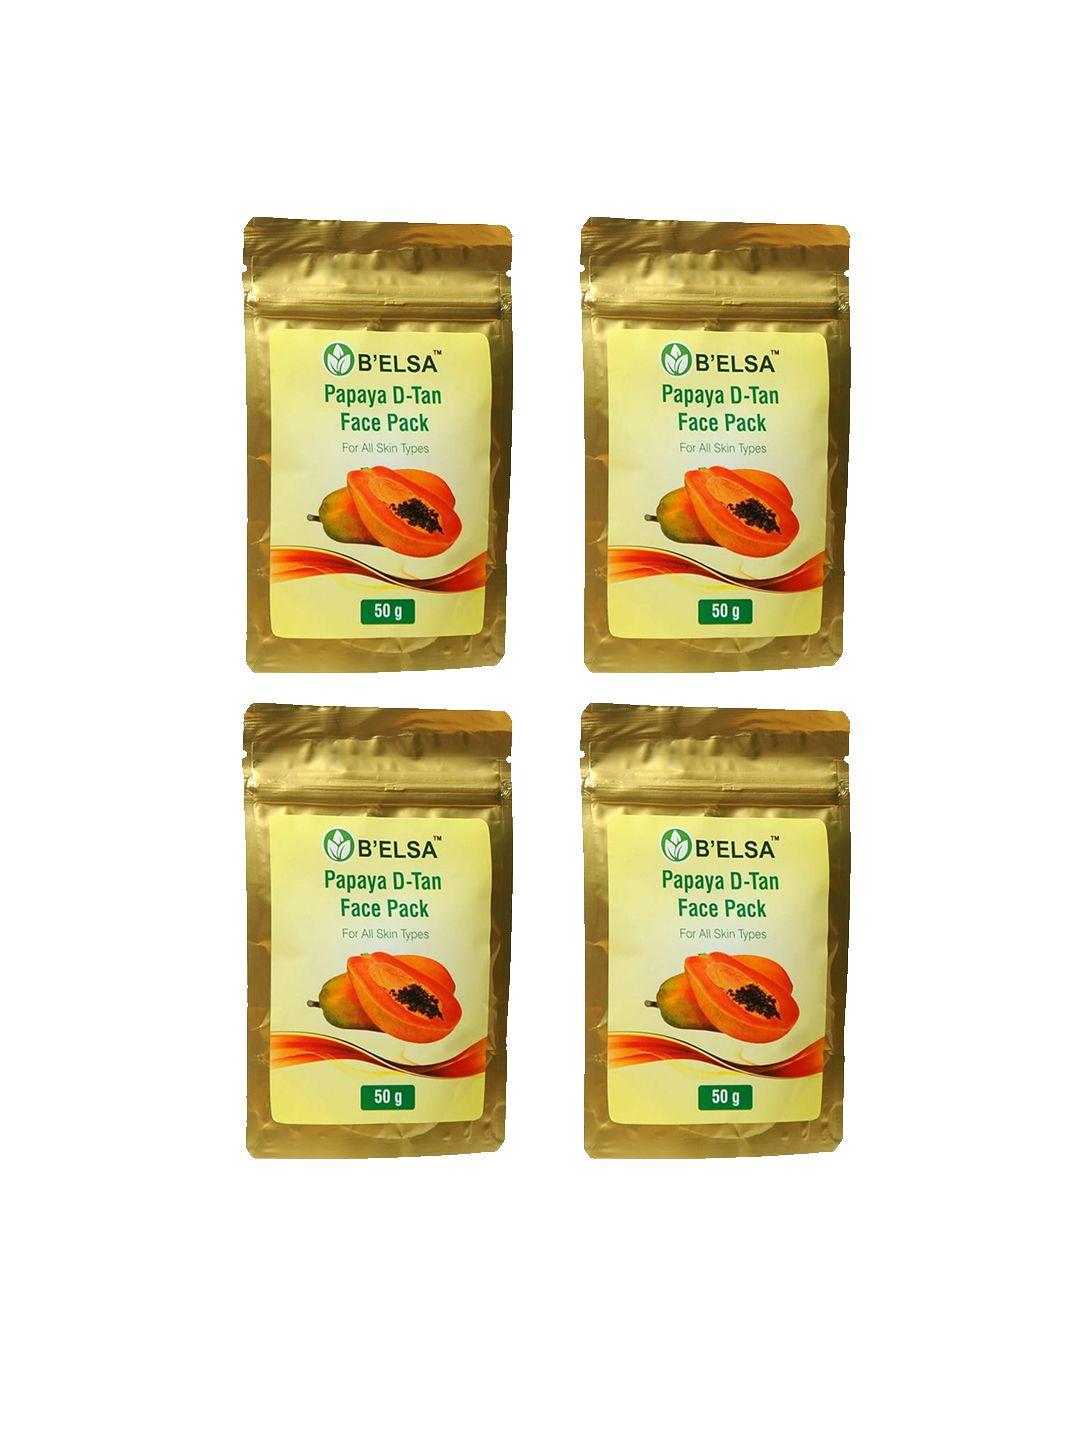 b'elsa herbal set of 4 papaya d-tan face pack for all skin types - 50 g each